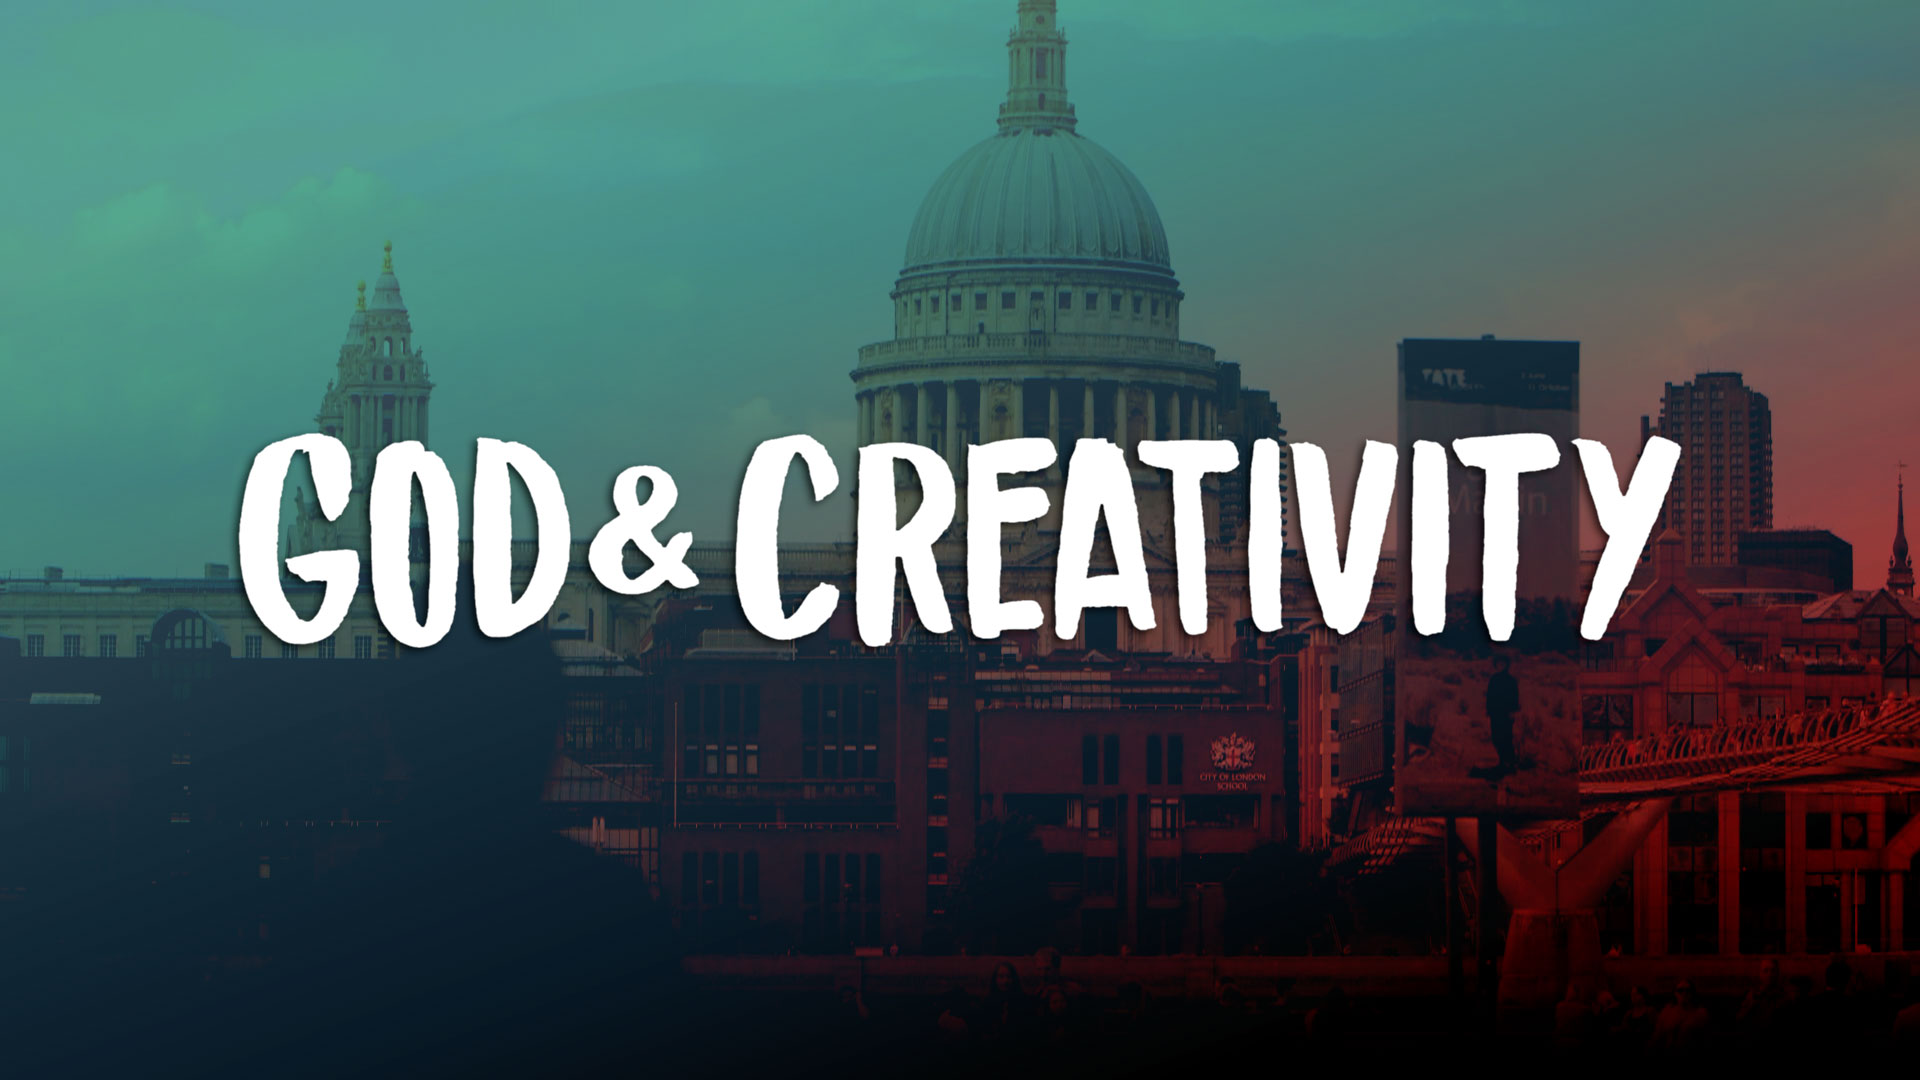 God & Creativity Series by WP Films